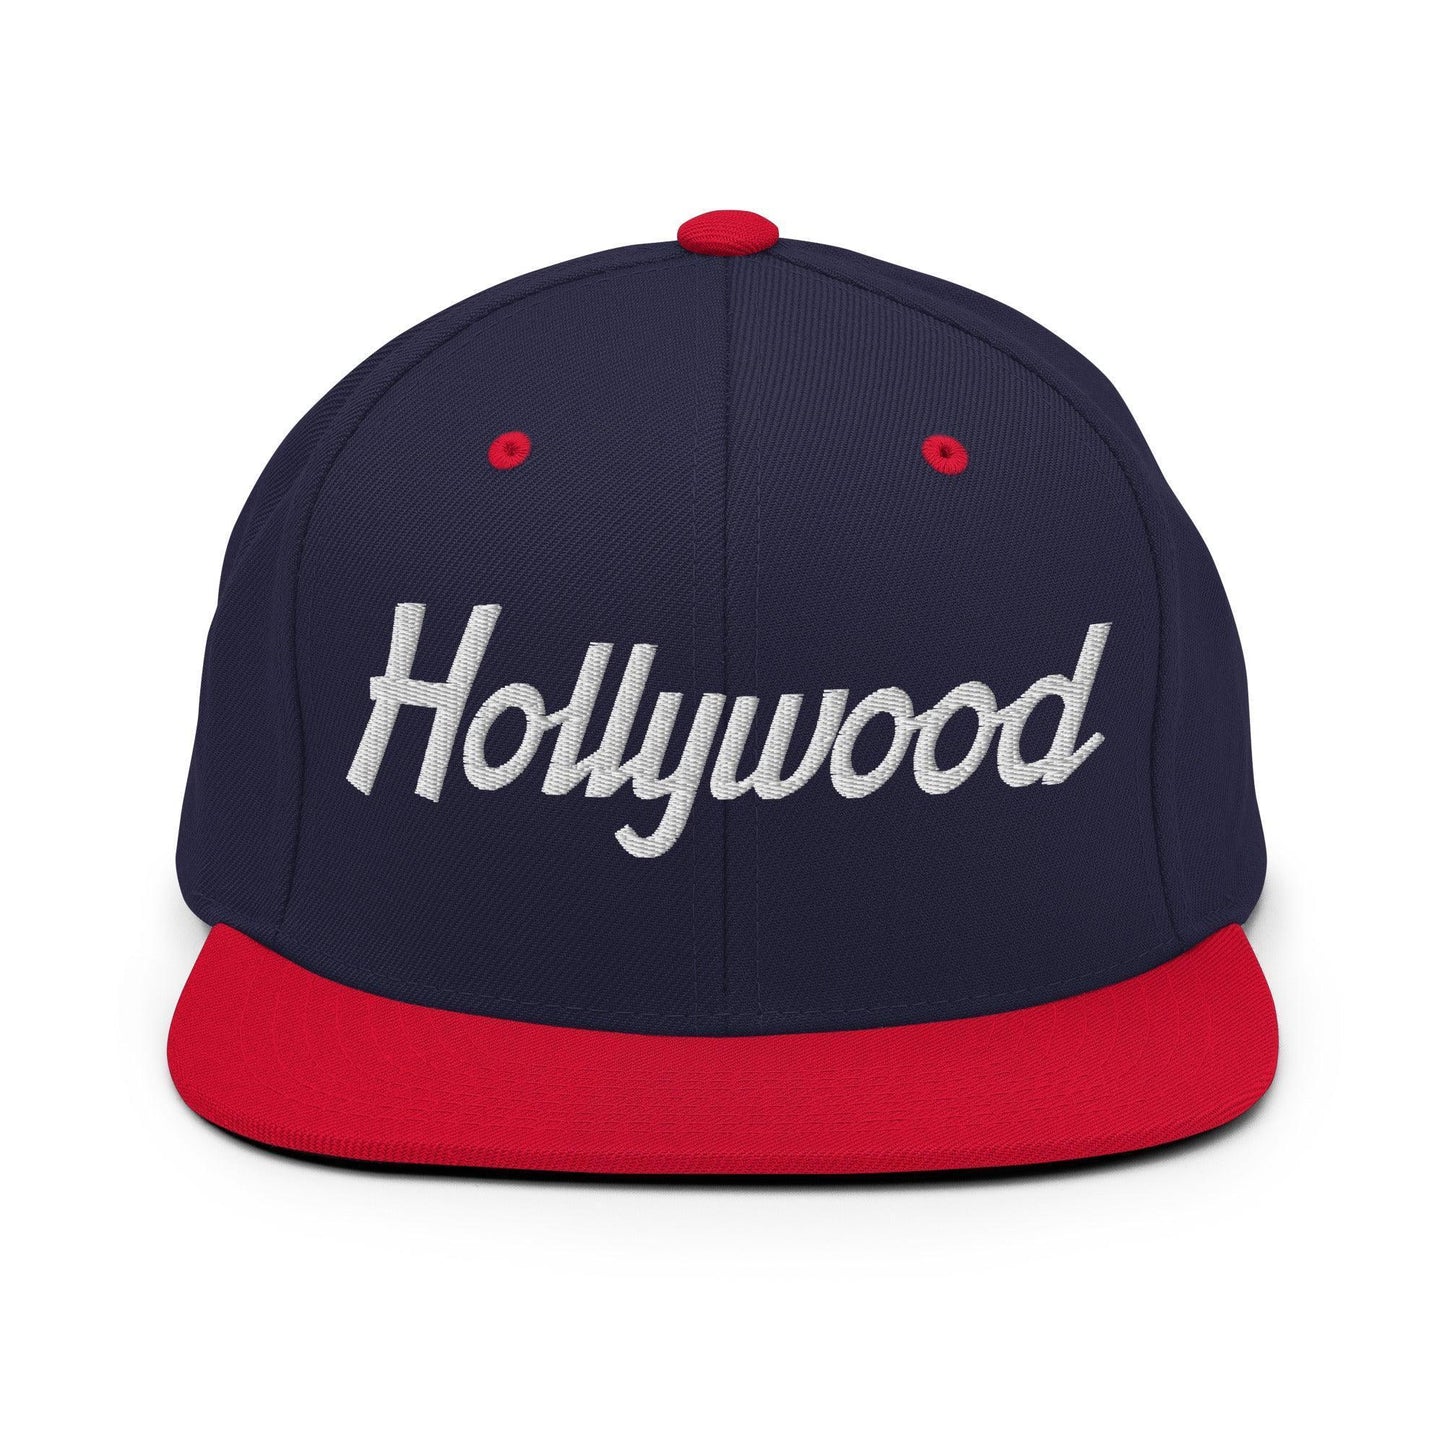 Hollywood Script Snapback Hat Navy/ Red